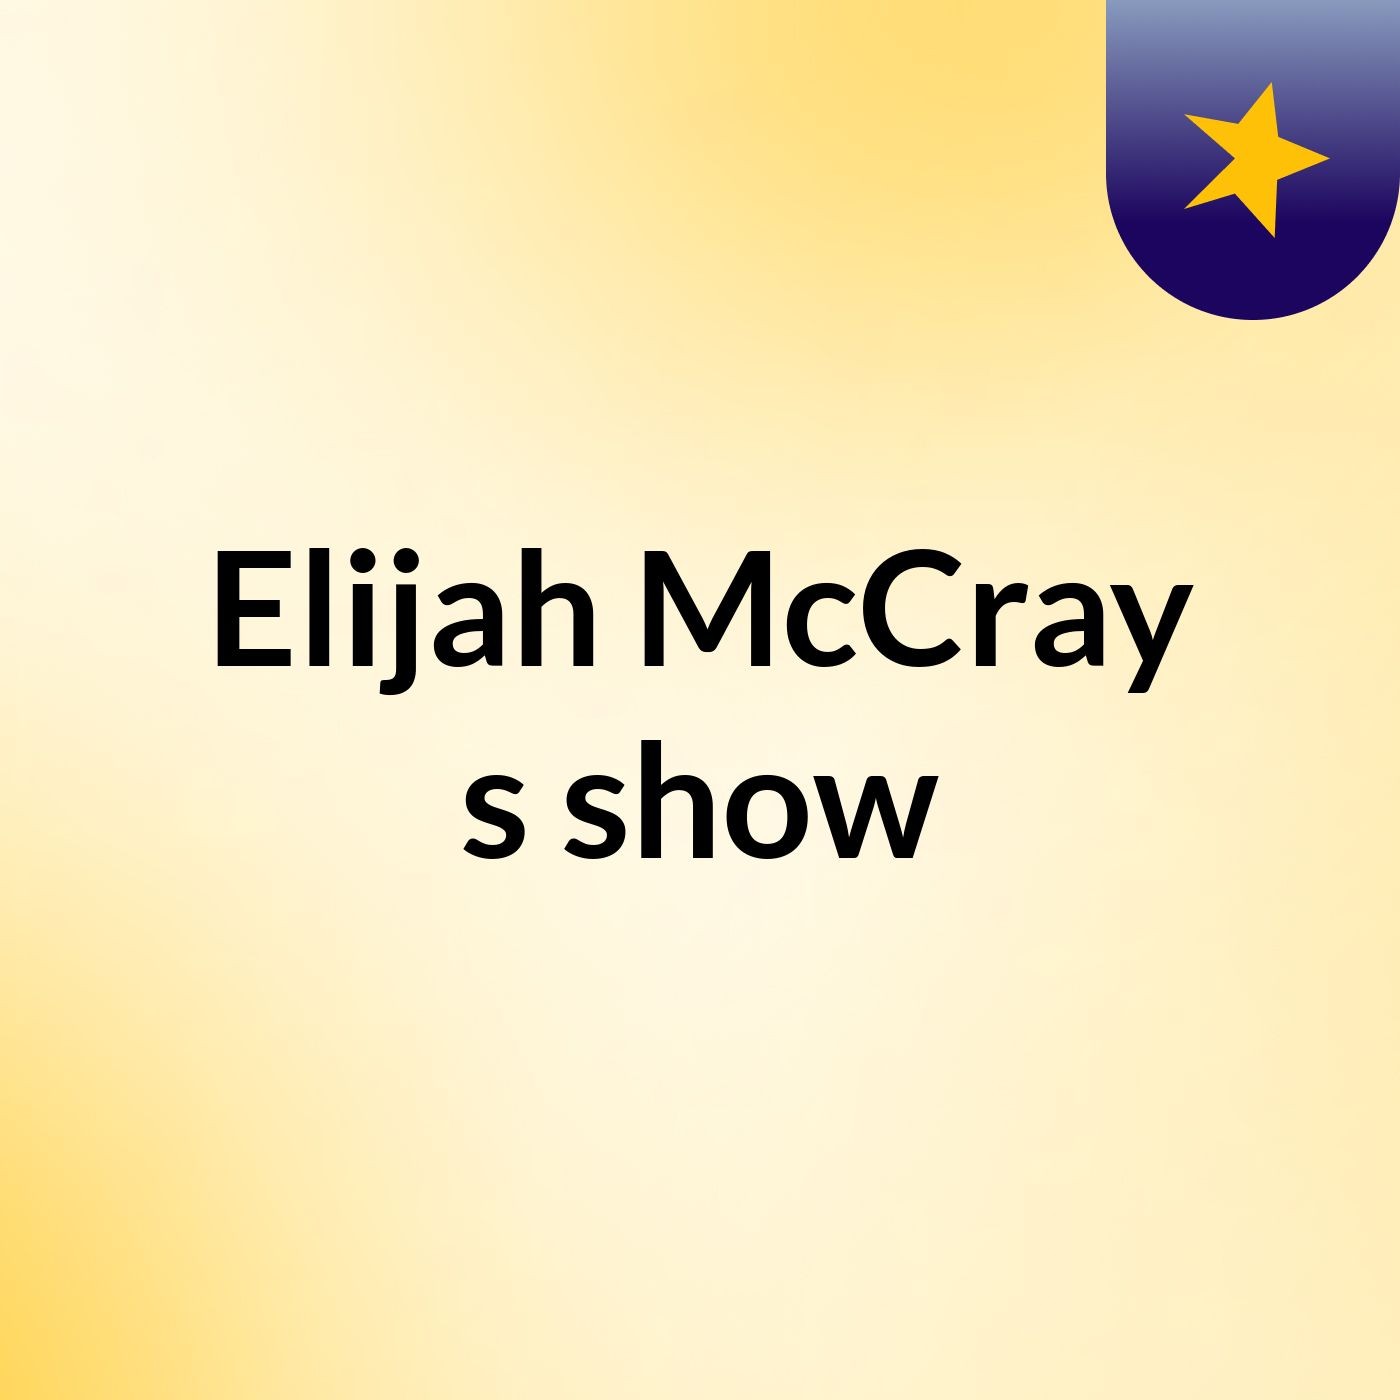 Episode 3 - Elijah McCray's show